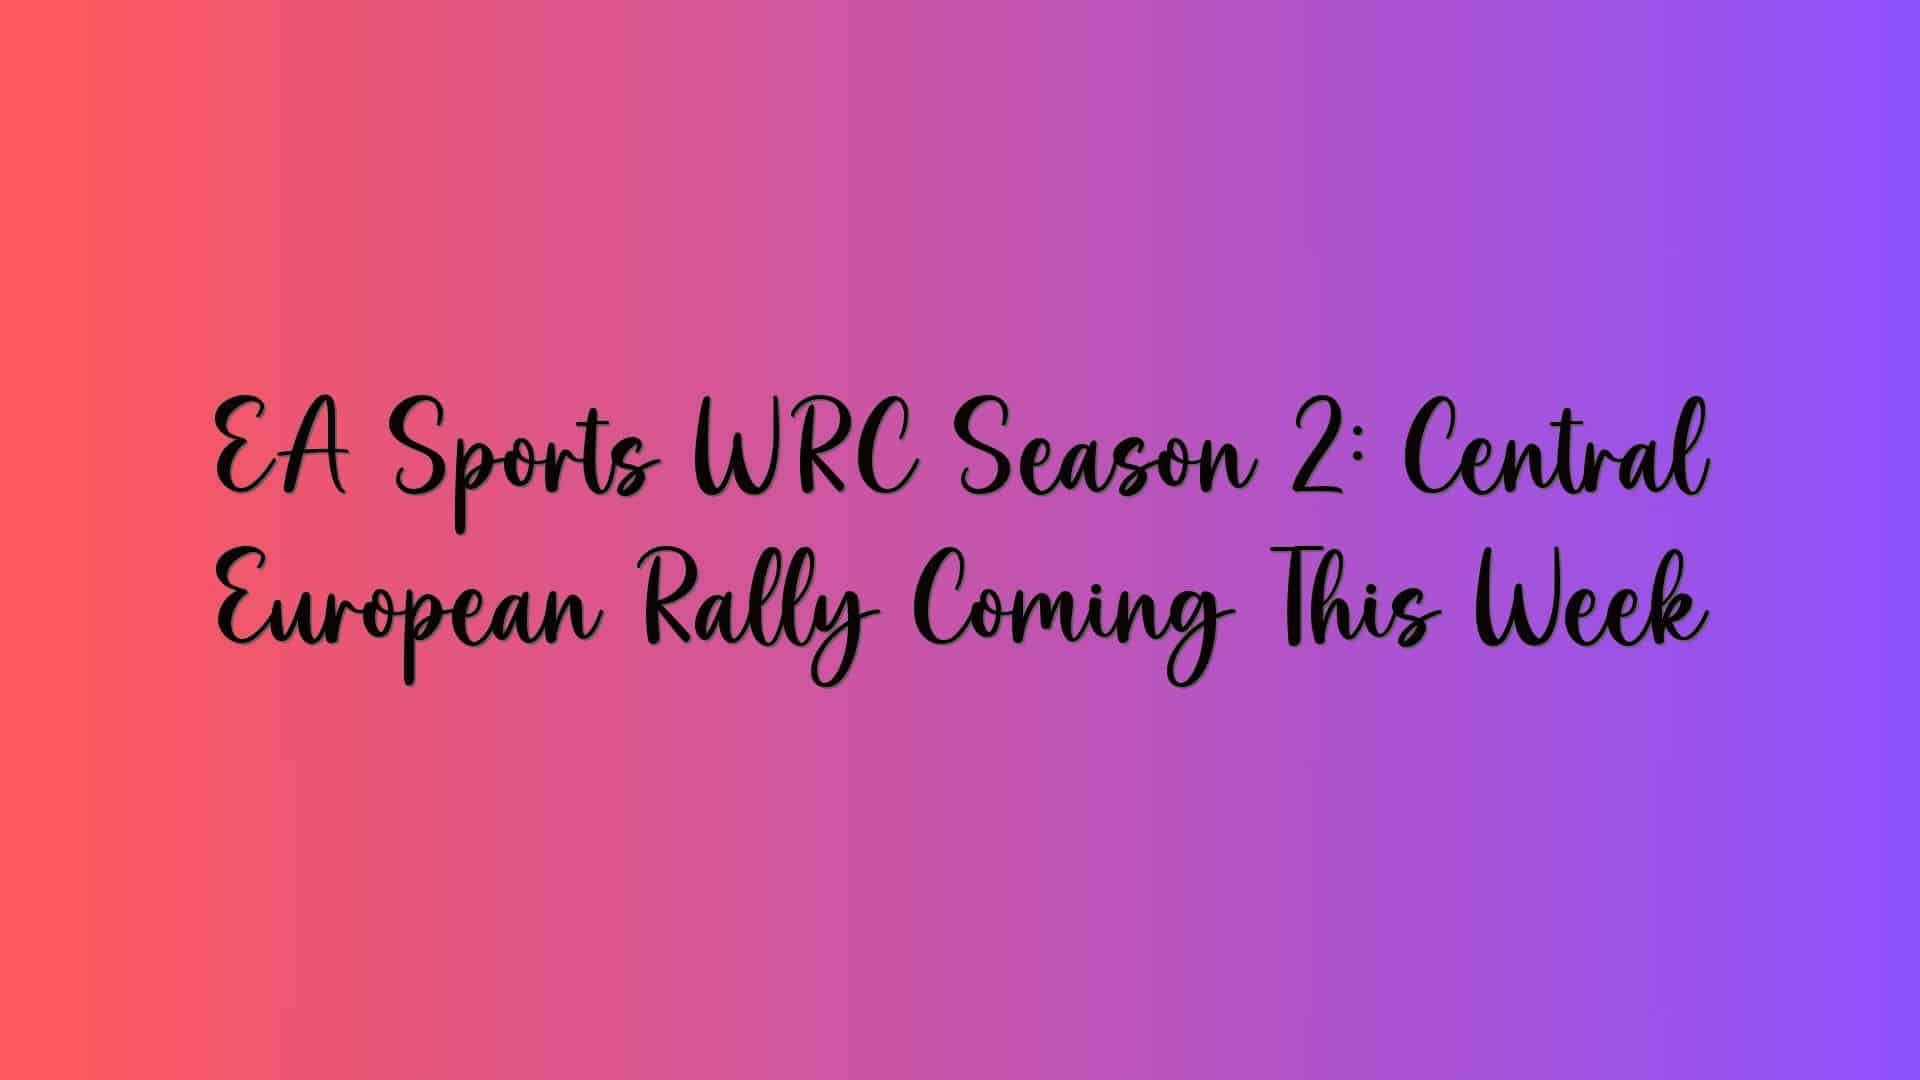 EA Sports WRC Season 2: Central European Rally Coming This Week